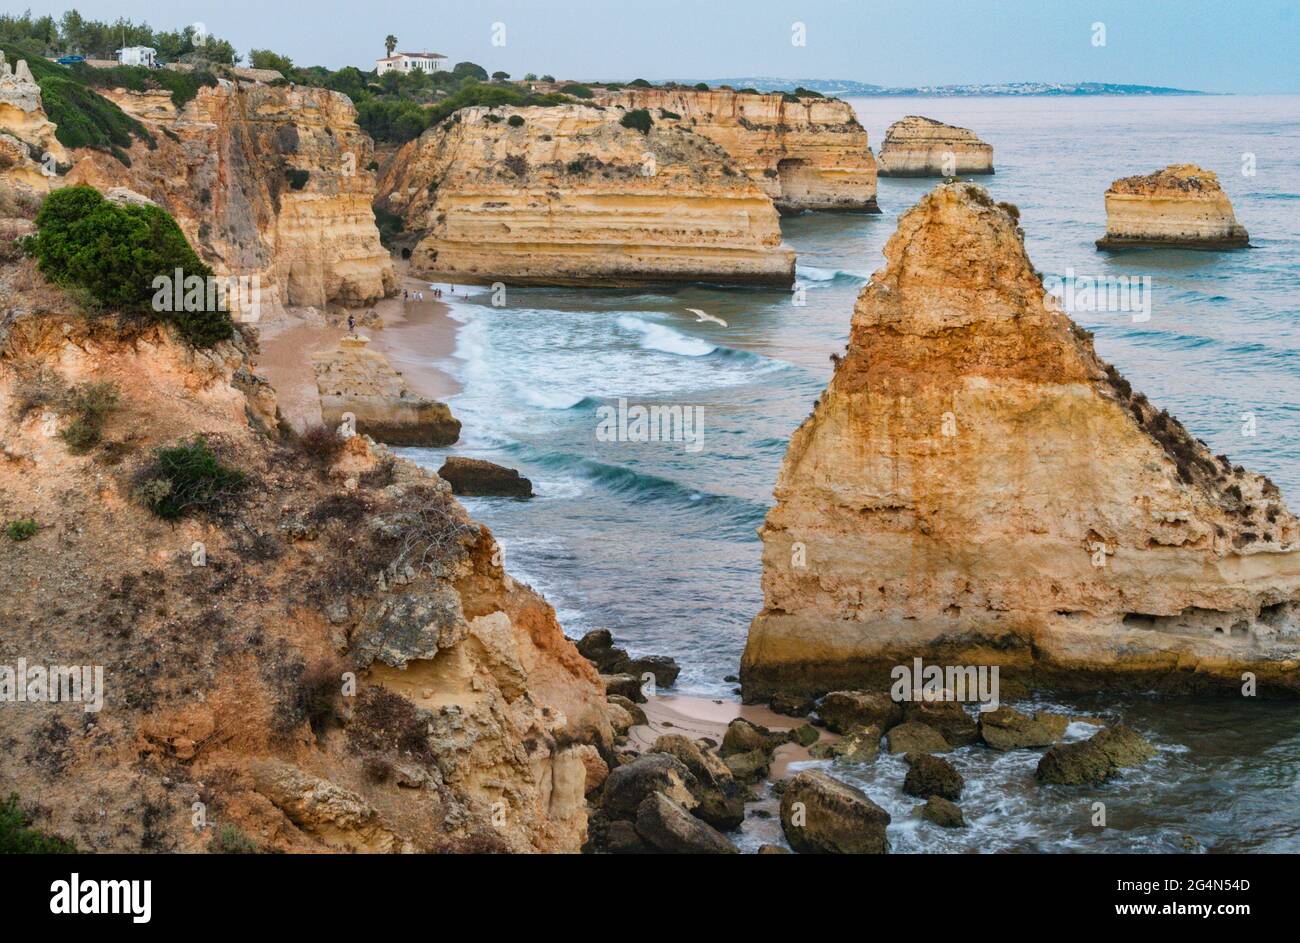 Lagos, Algarve, bonitas calas entre acantilados espectaculares. Stock Photo